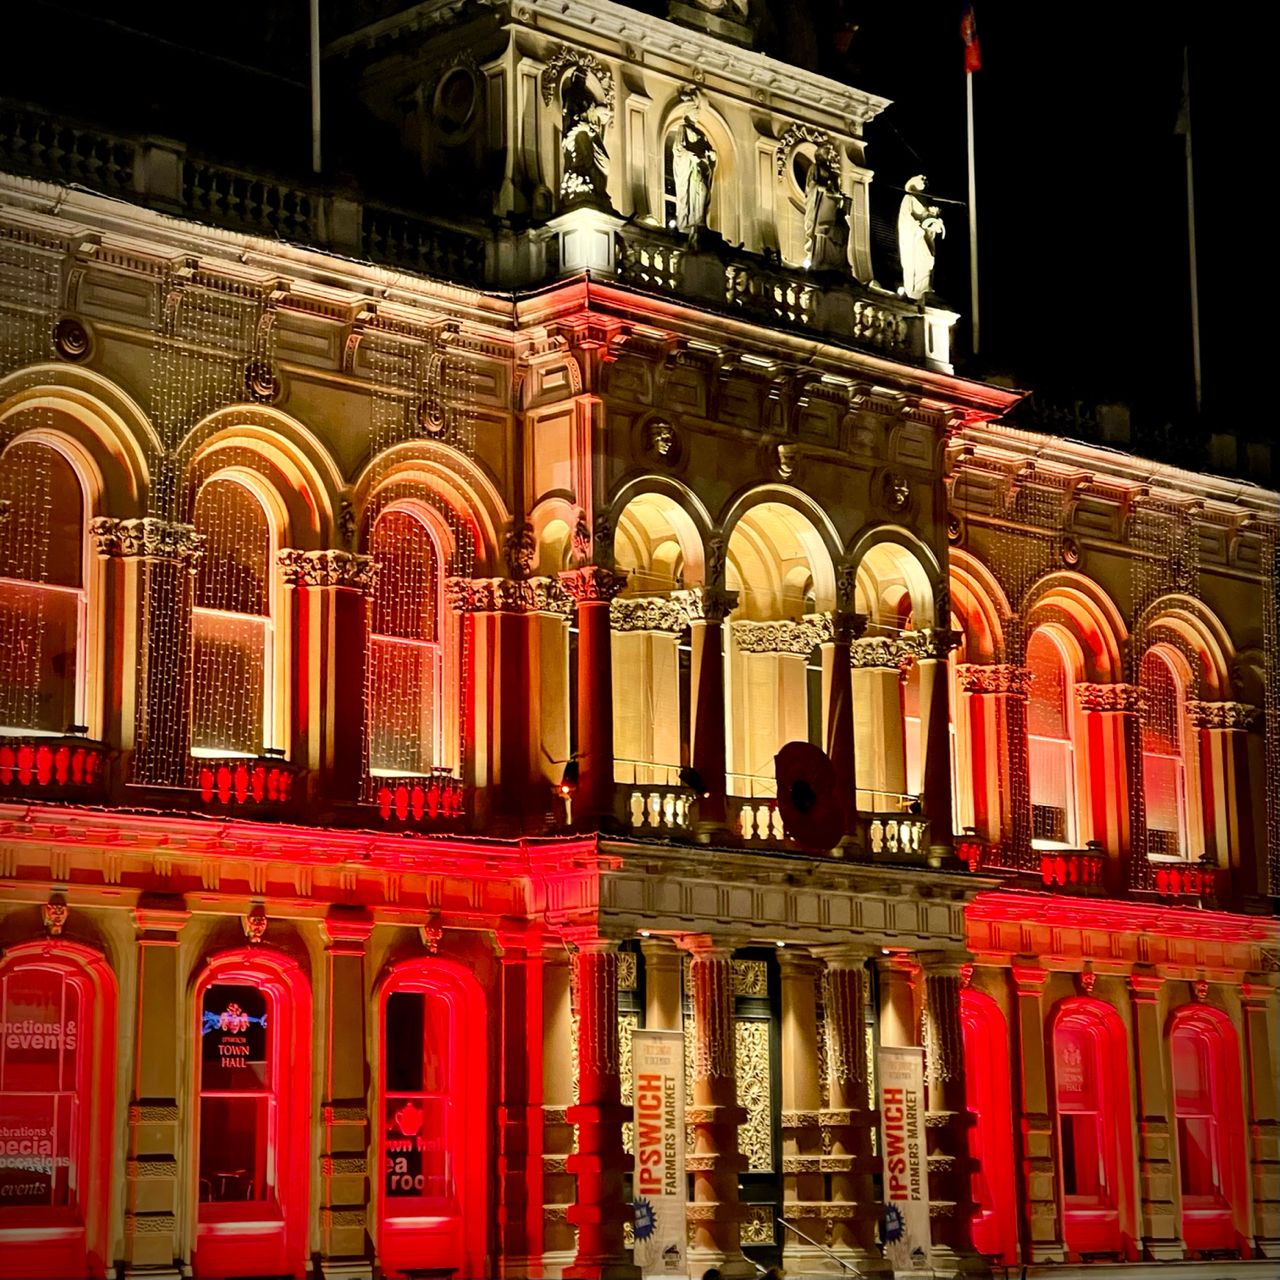 Town Hall at night - From Tavern Street, Ipswich, United Kingdom